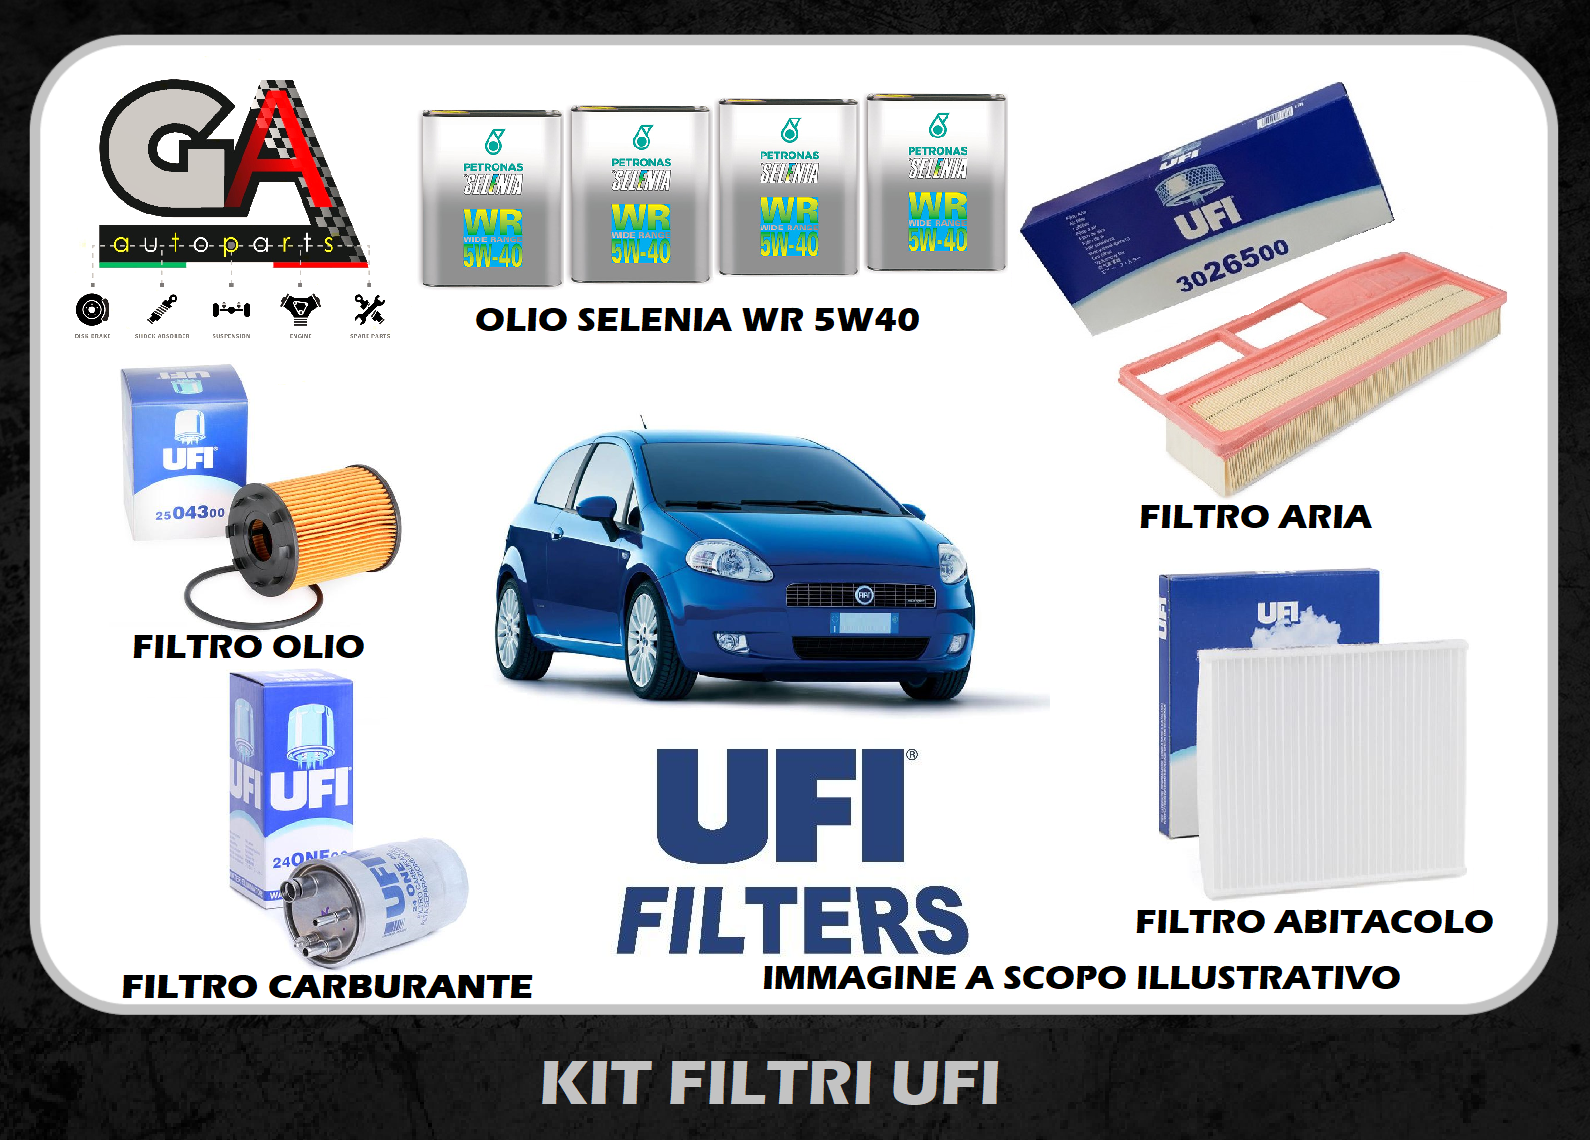 Kit tagliando Grande Punto 1.3 multijet 75cv filtri UFI 4 litri